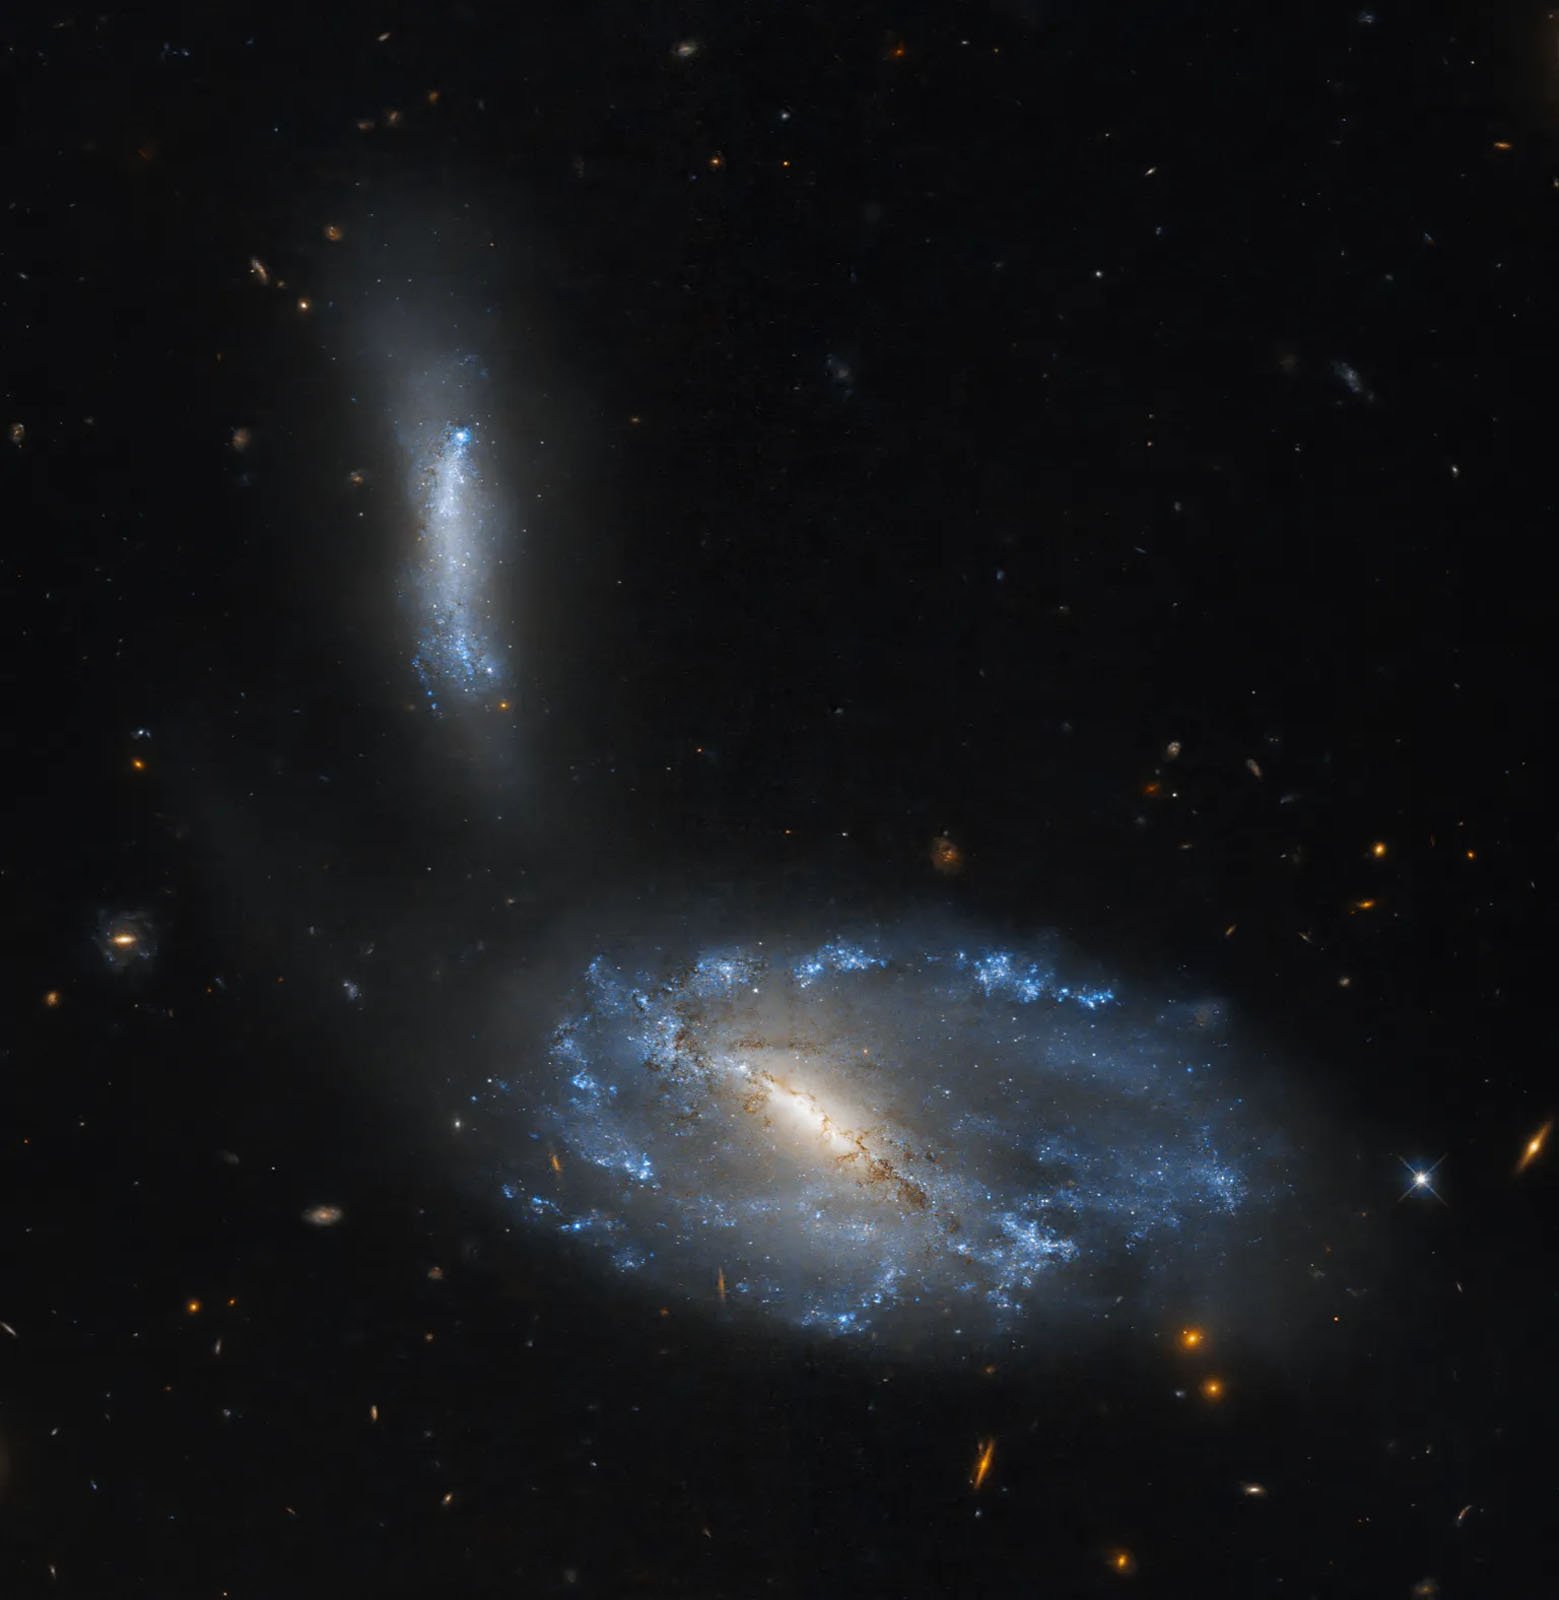 Hubble Space Telescope colliding galaxies 